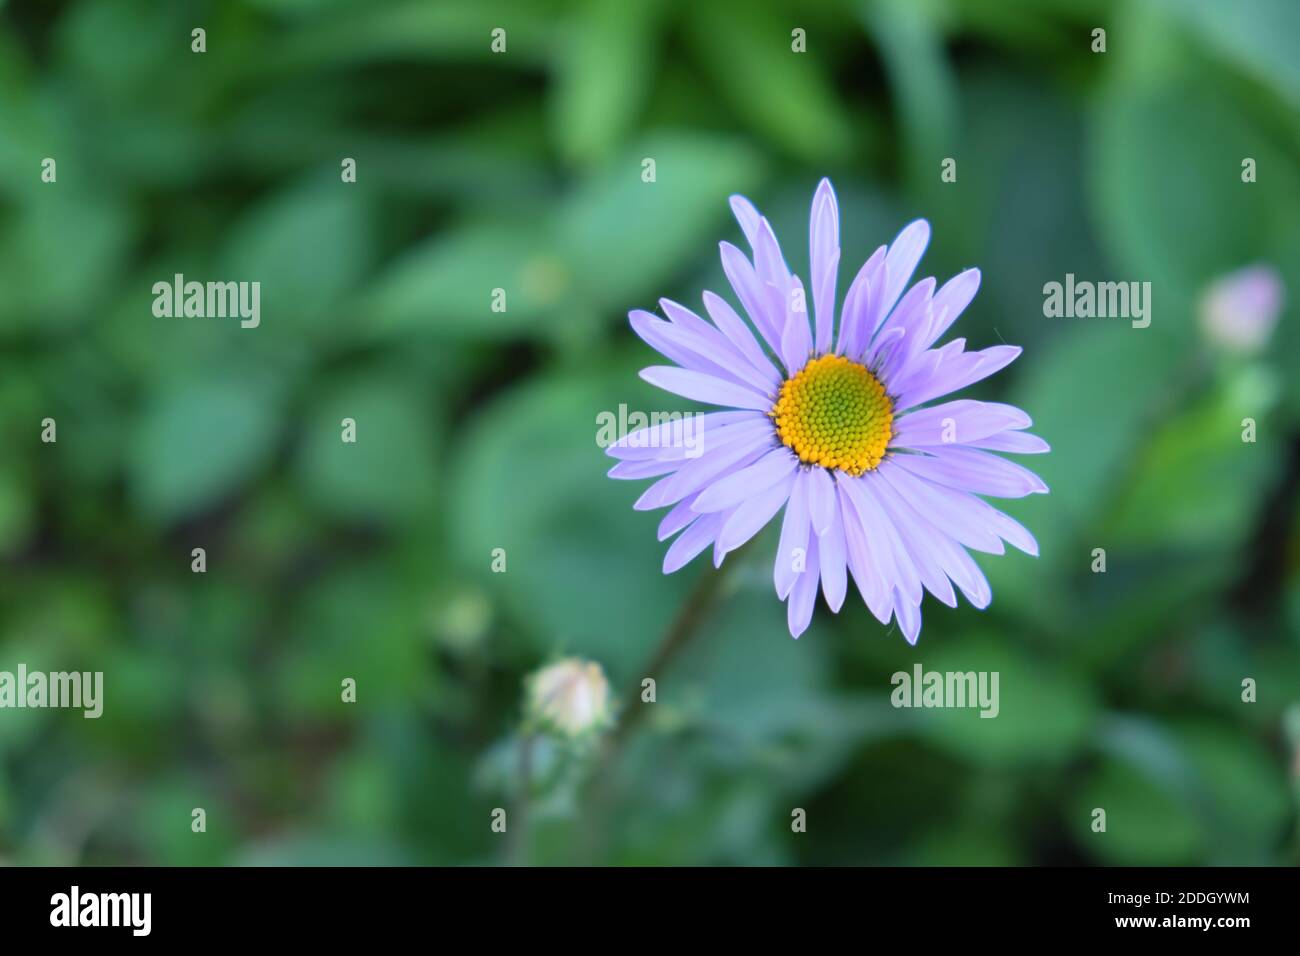 Daisy flower with purple petals. Beautiful wild flower. Stock Photo